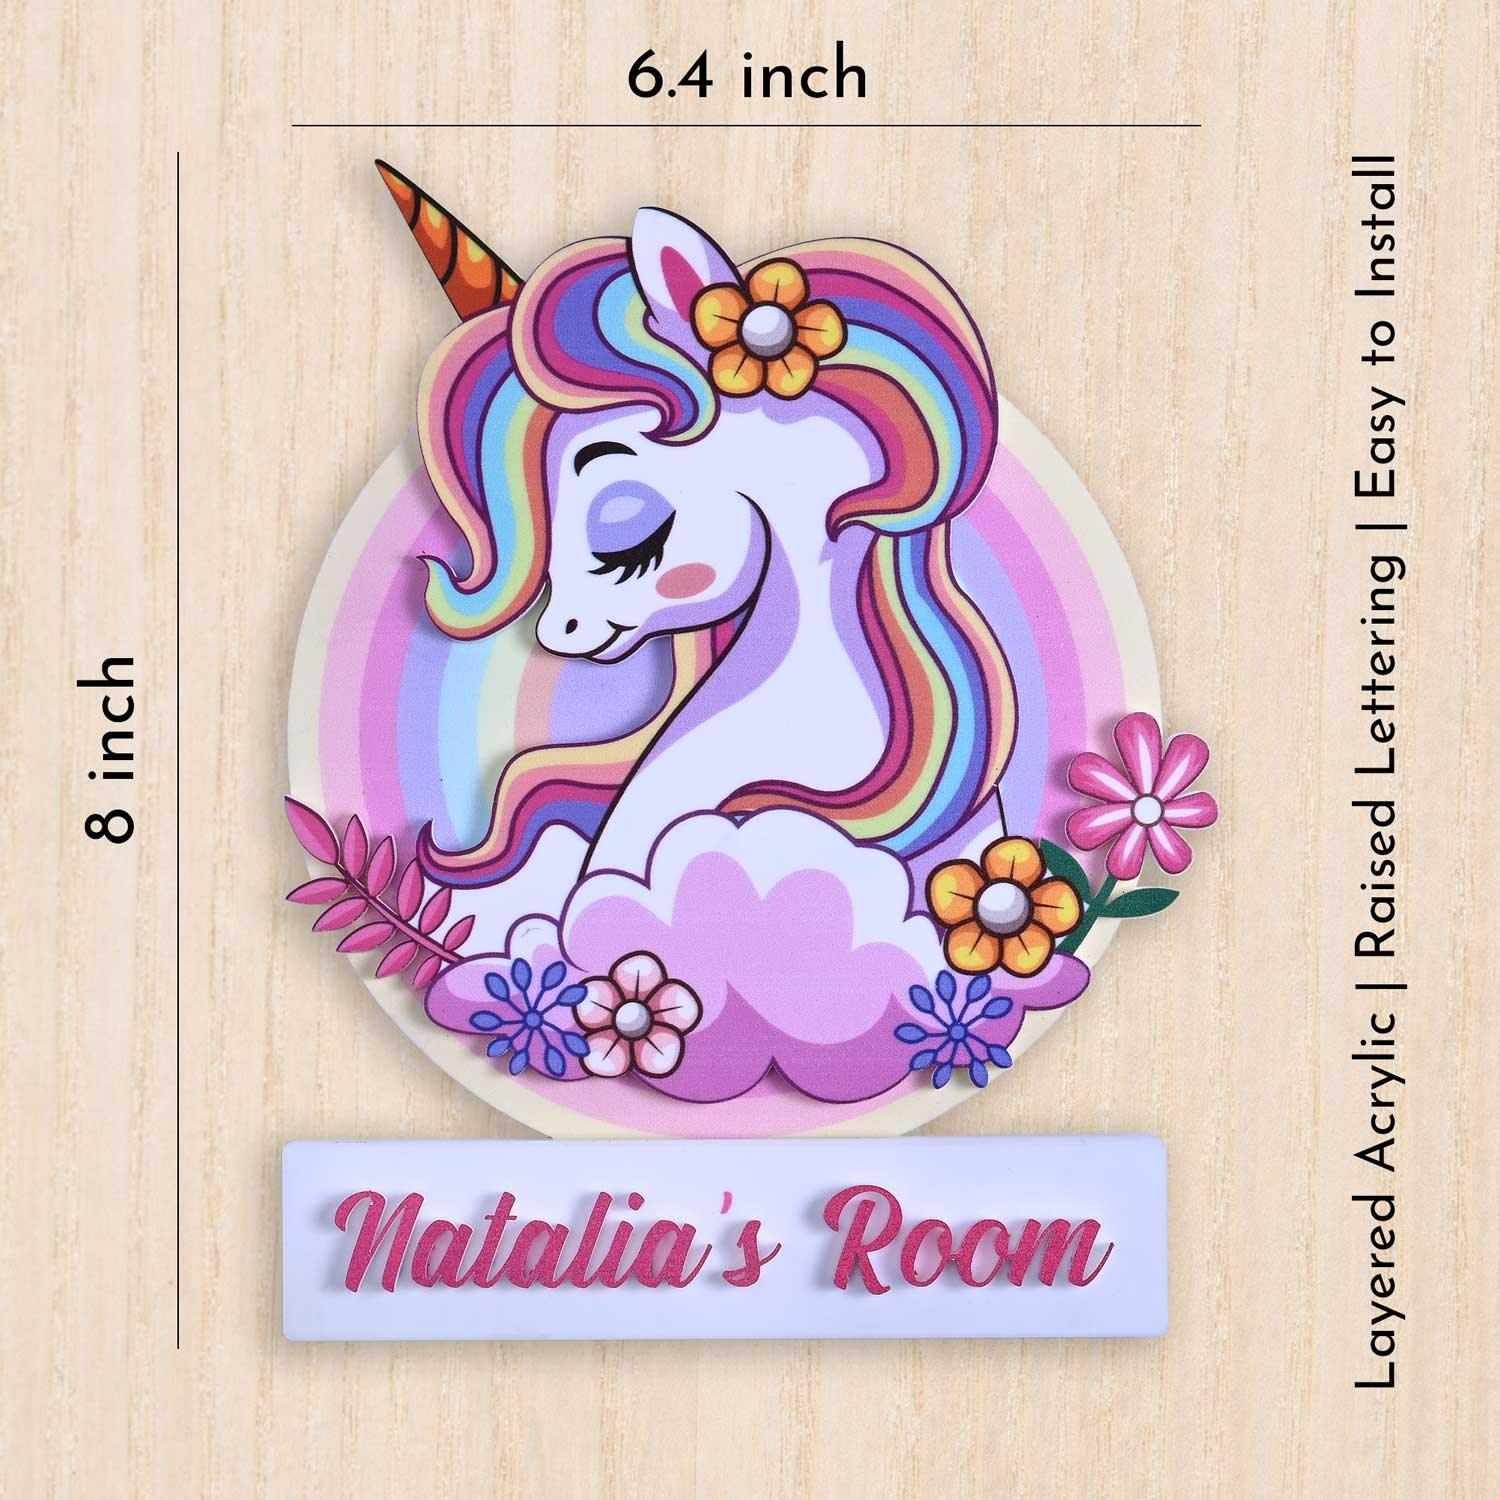 Rainbow Unicorn - Kids' Room Door Sign - Housenama